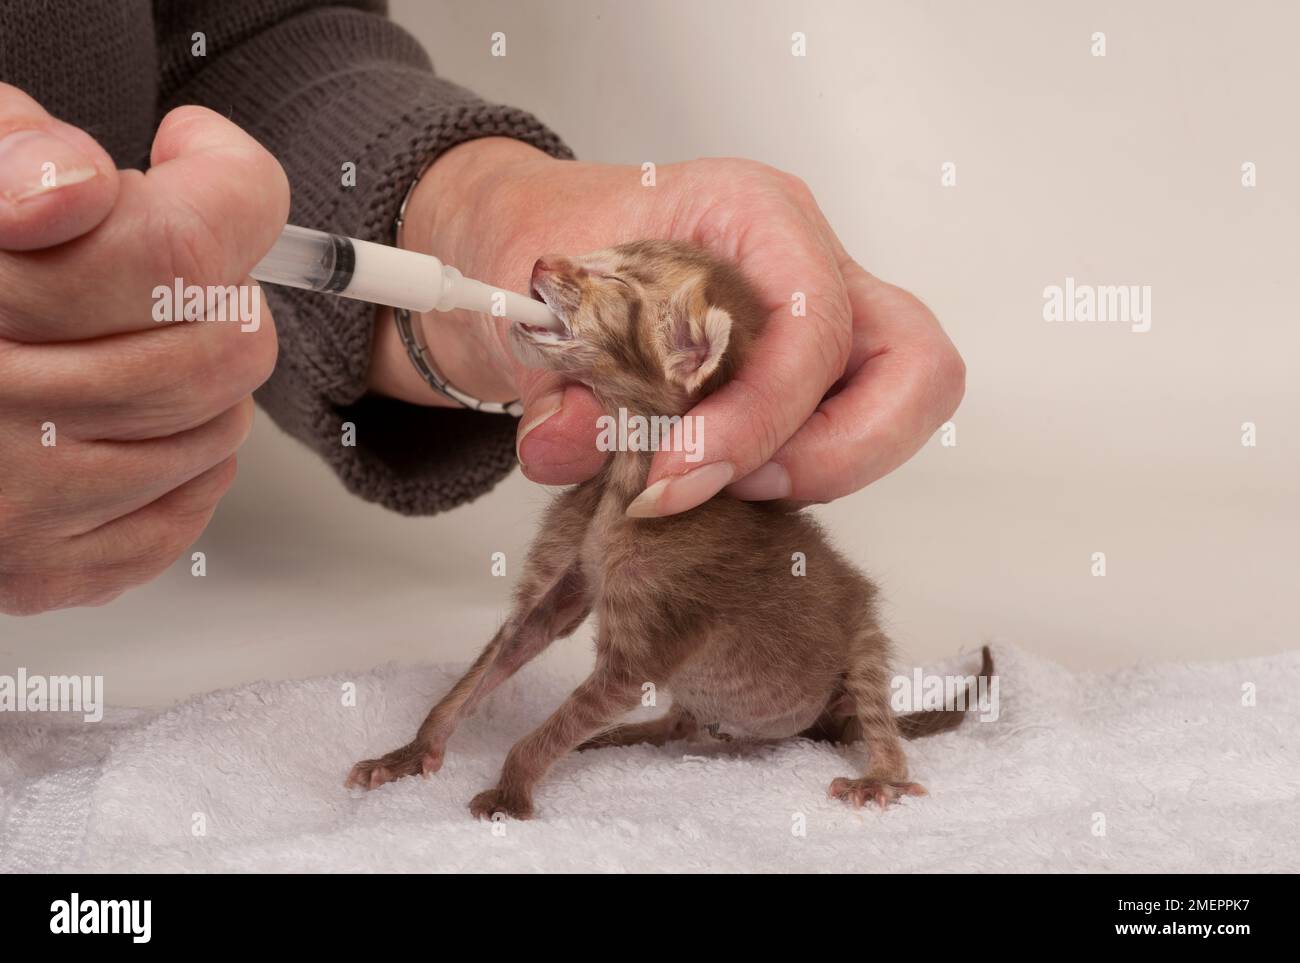 Feeding milk to a kitten using a syringe Stock Photo - Alamy